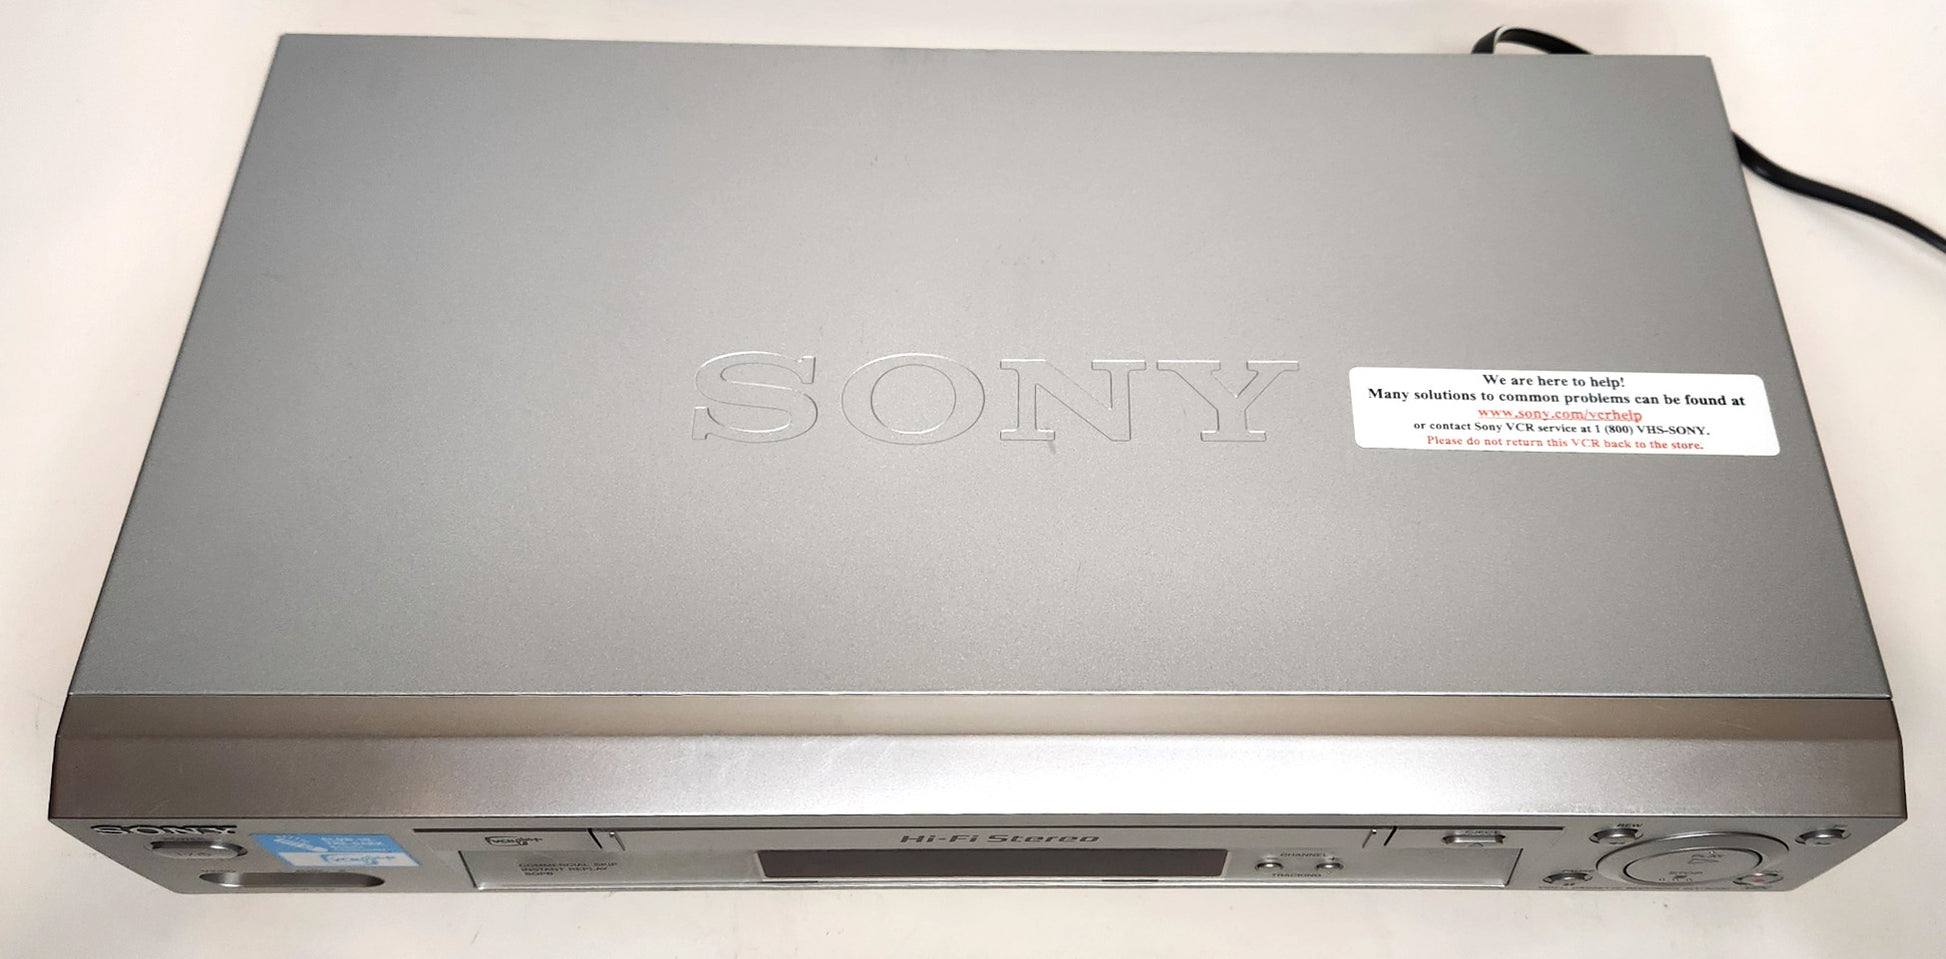 Sony SLV-N700 VCR, 4-Head Hi-Fi Stereo - Top